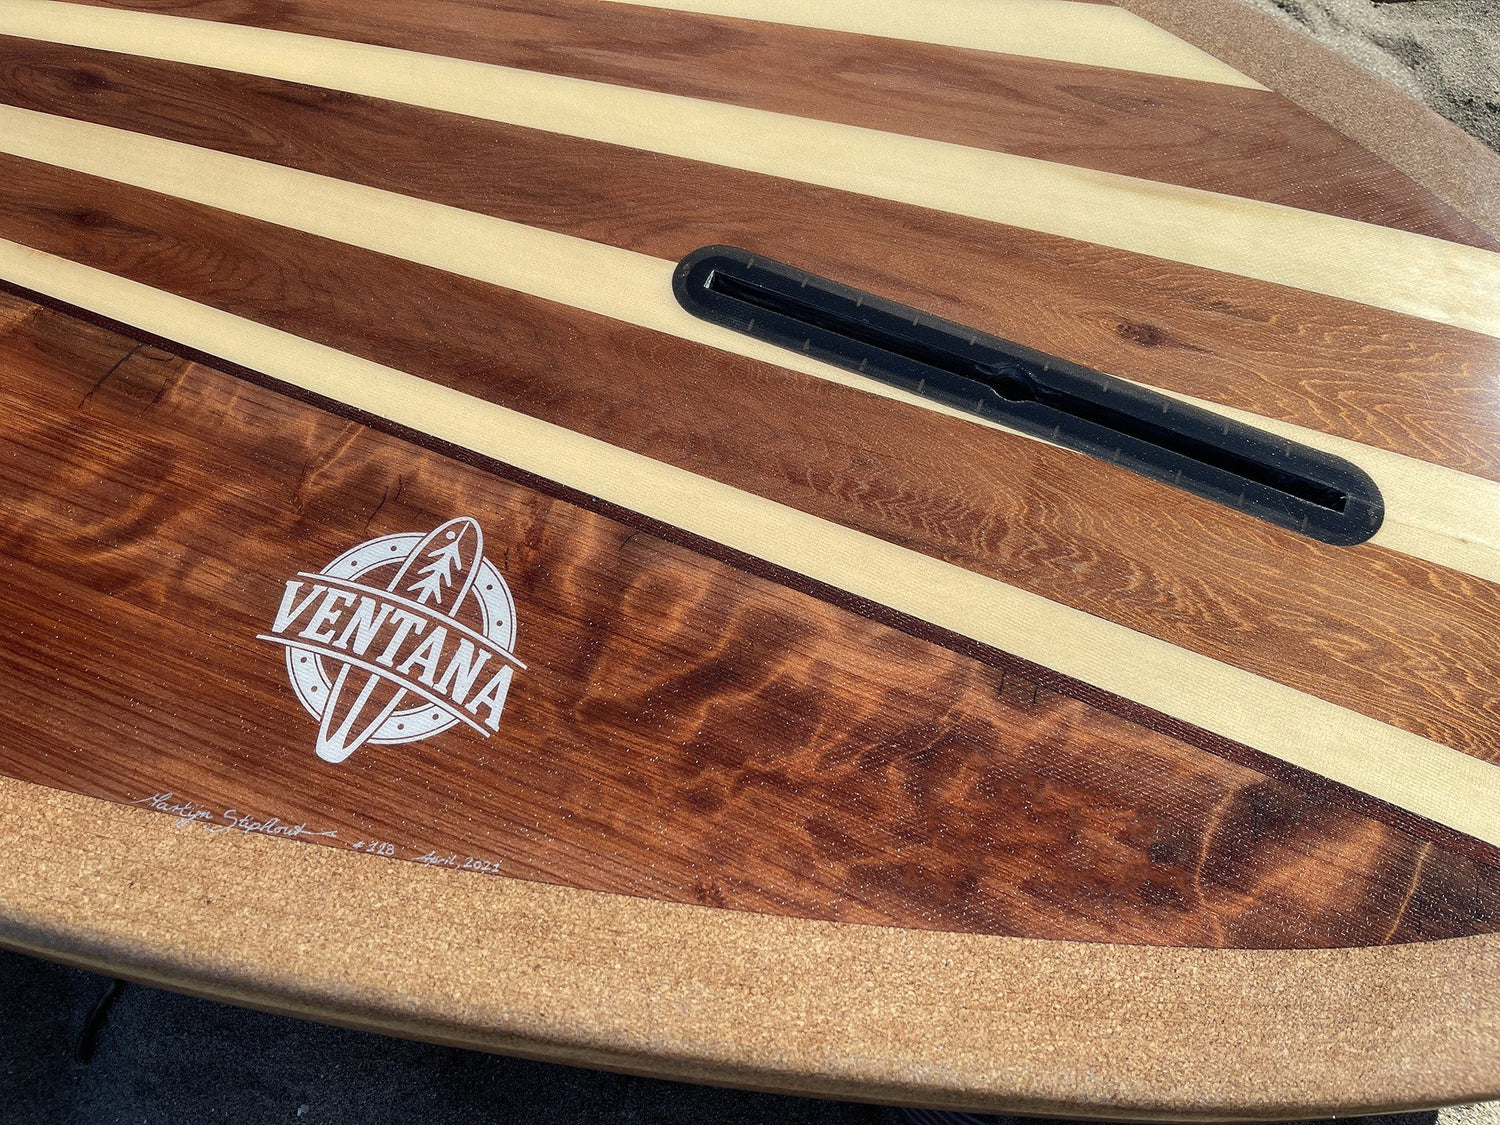 Laybourn Sunburst Flyer Paddle Board 9'6” – Ventana Surfboards